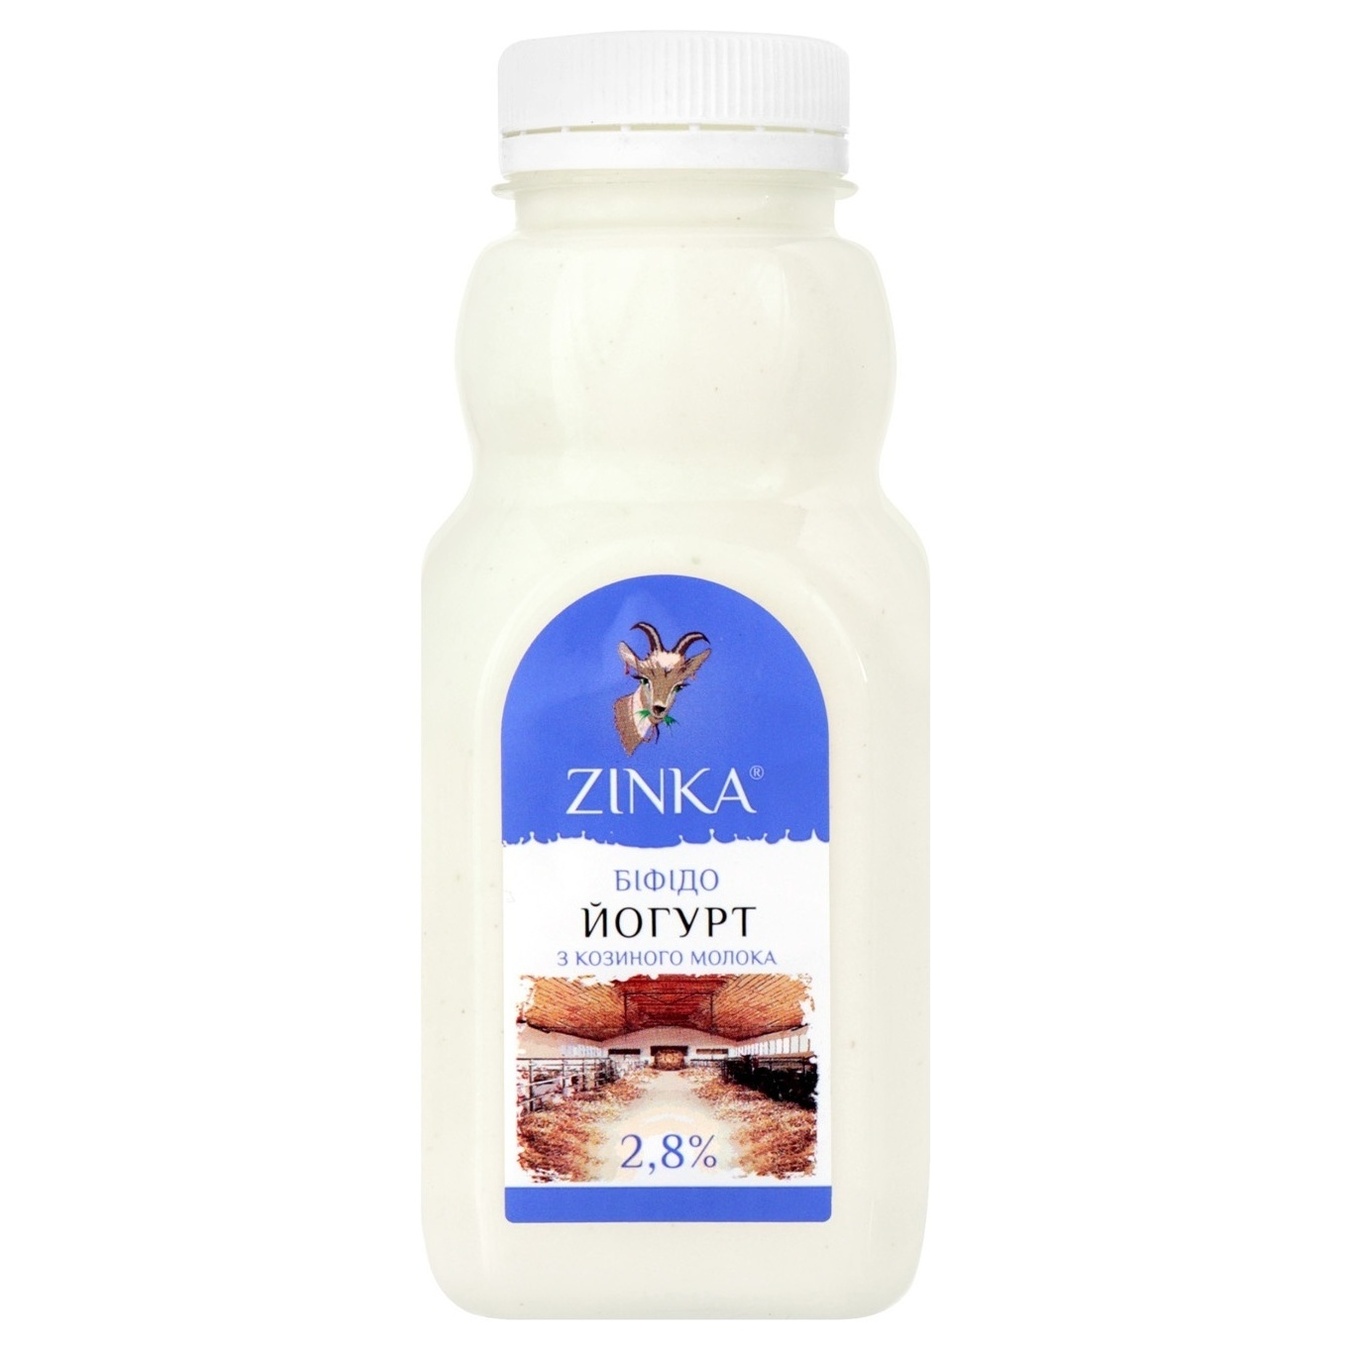 Zinka From Goat's Milk Bifidoyogurt 2,8%
300g